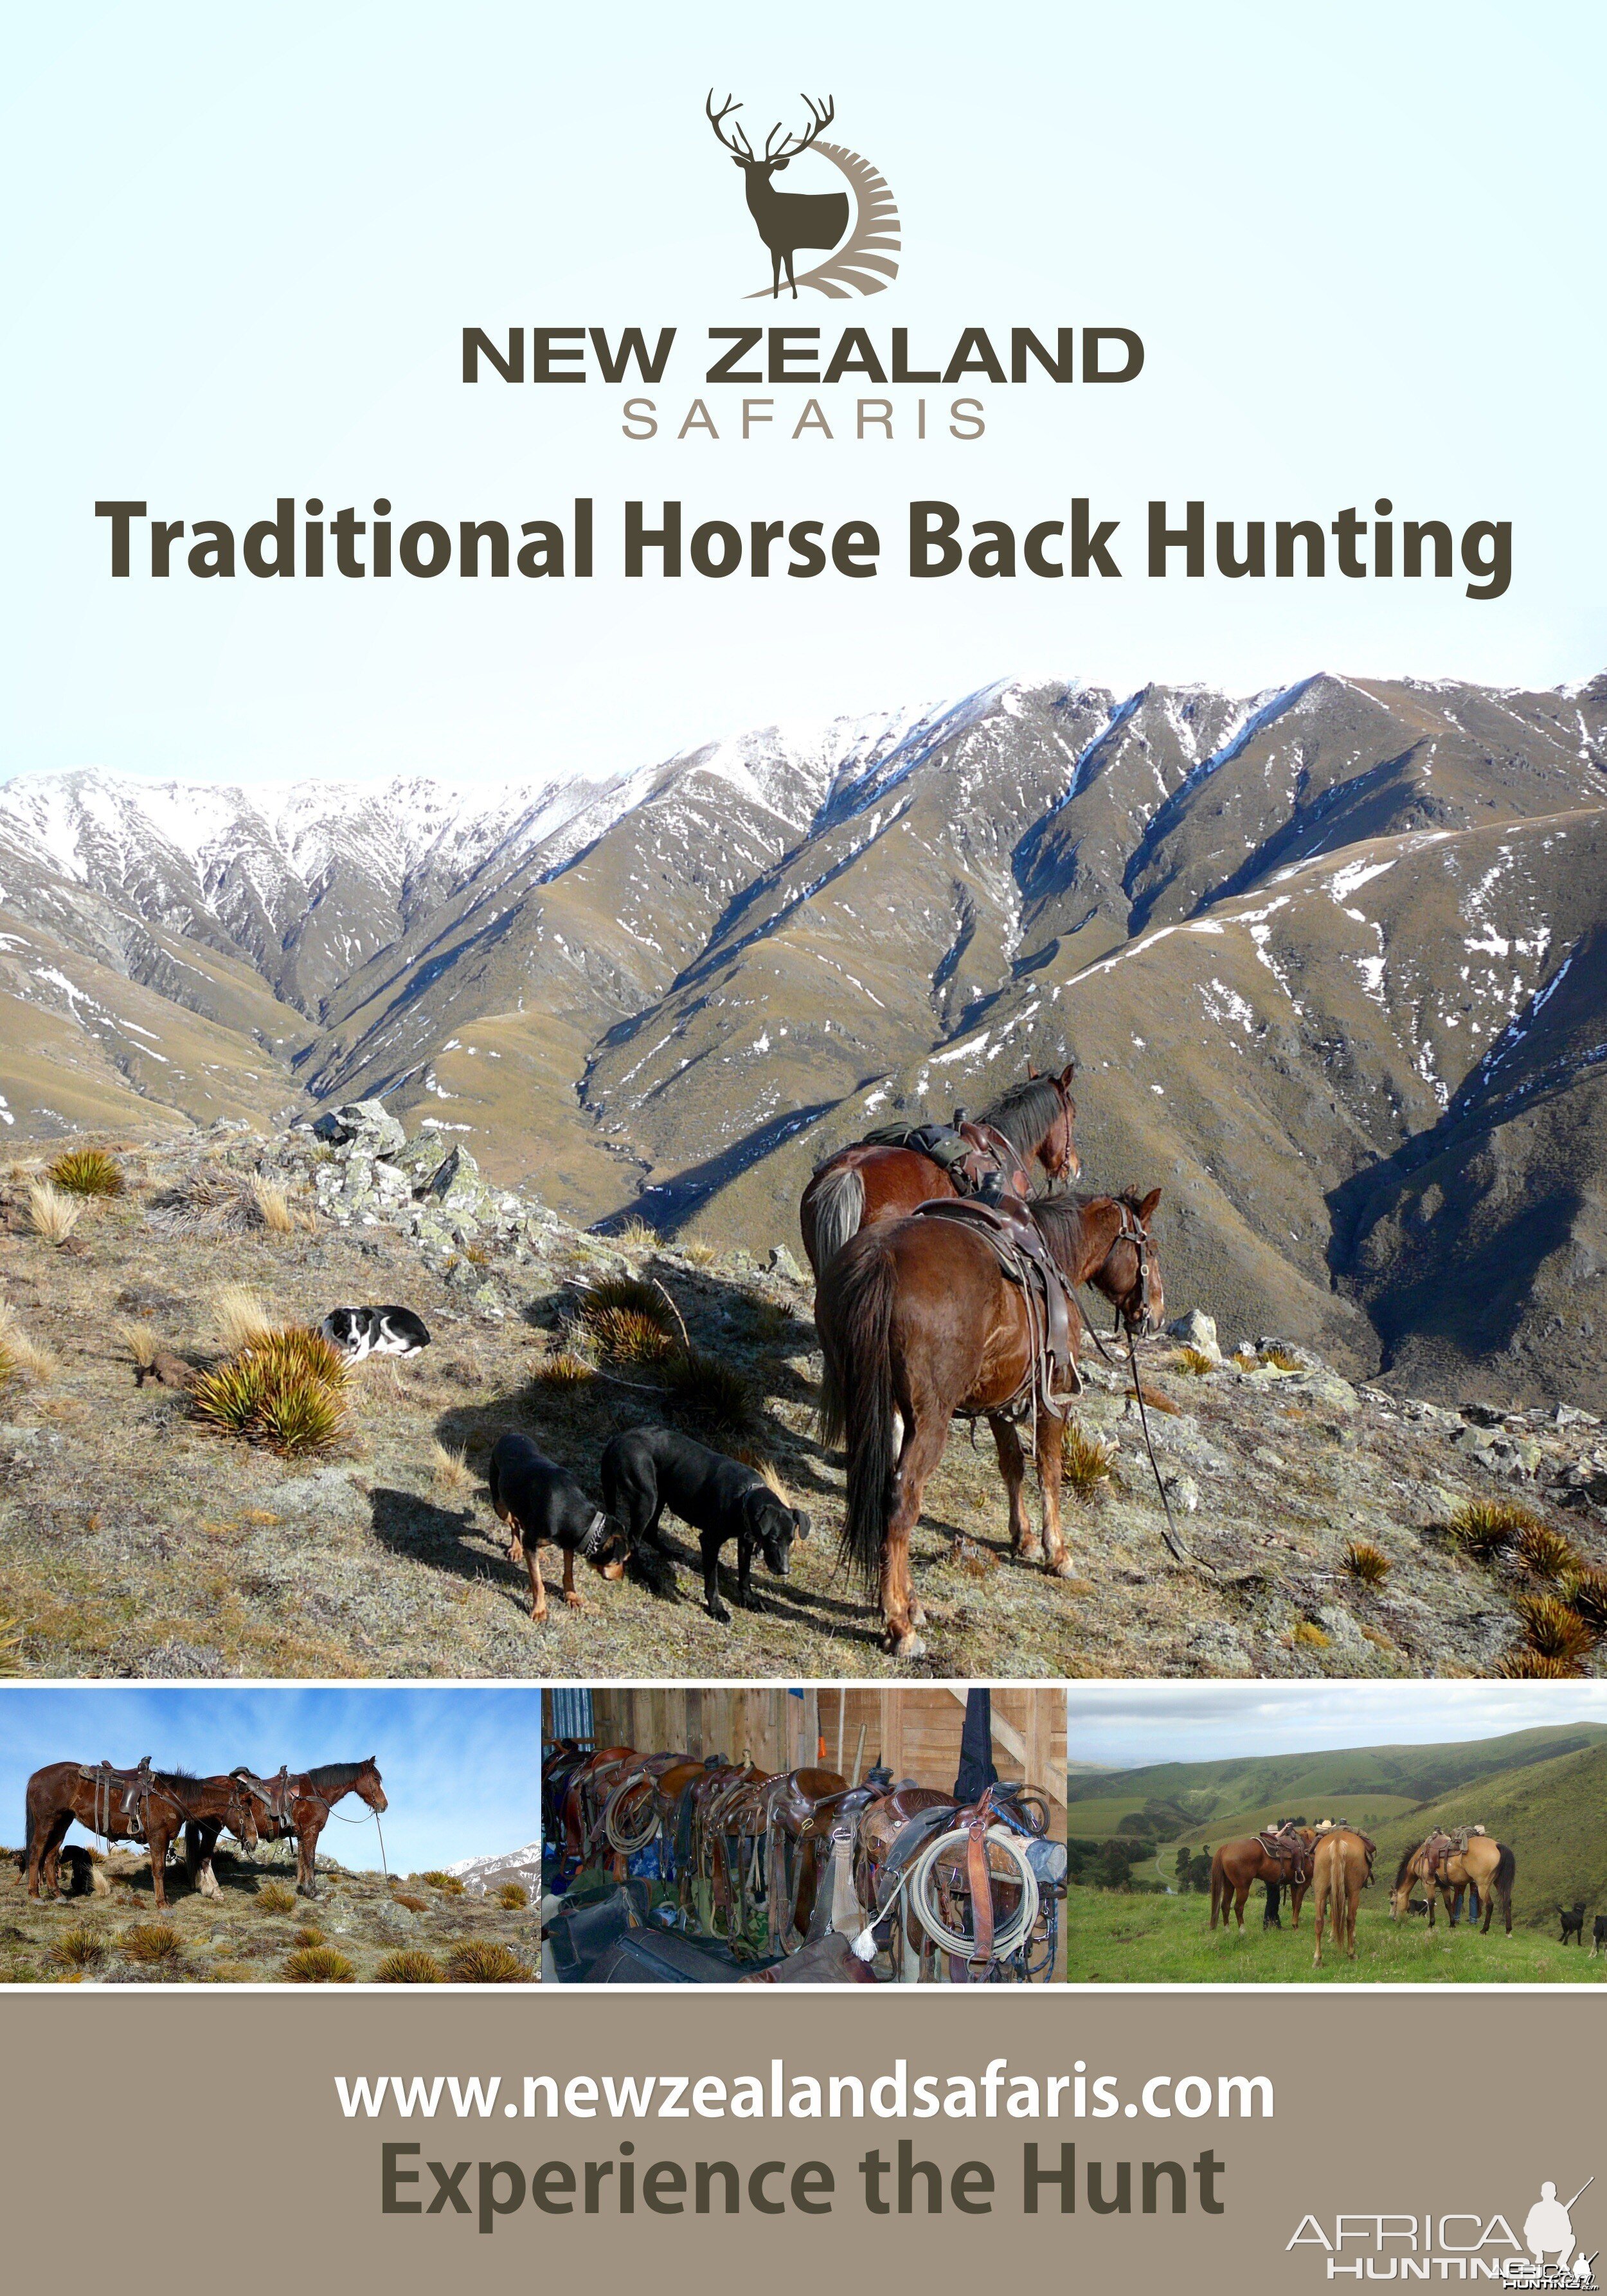 Horse back hunting New Zealand